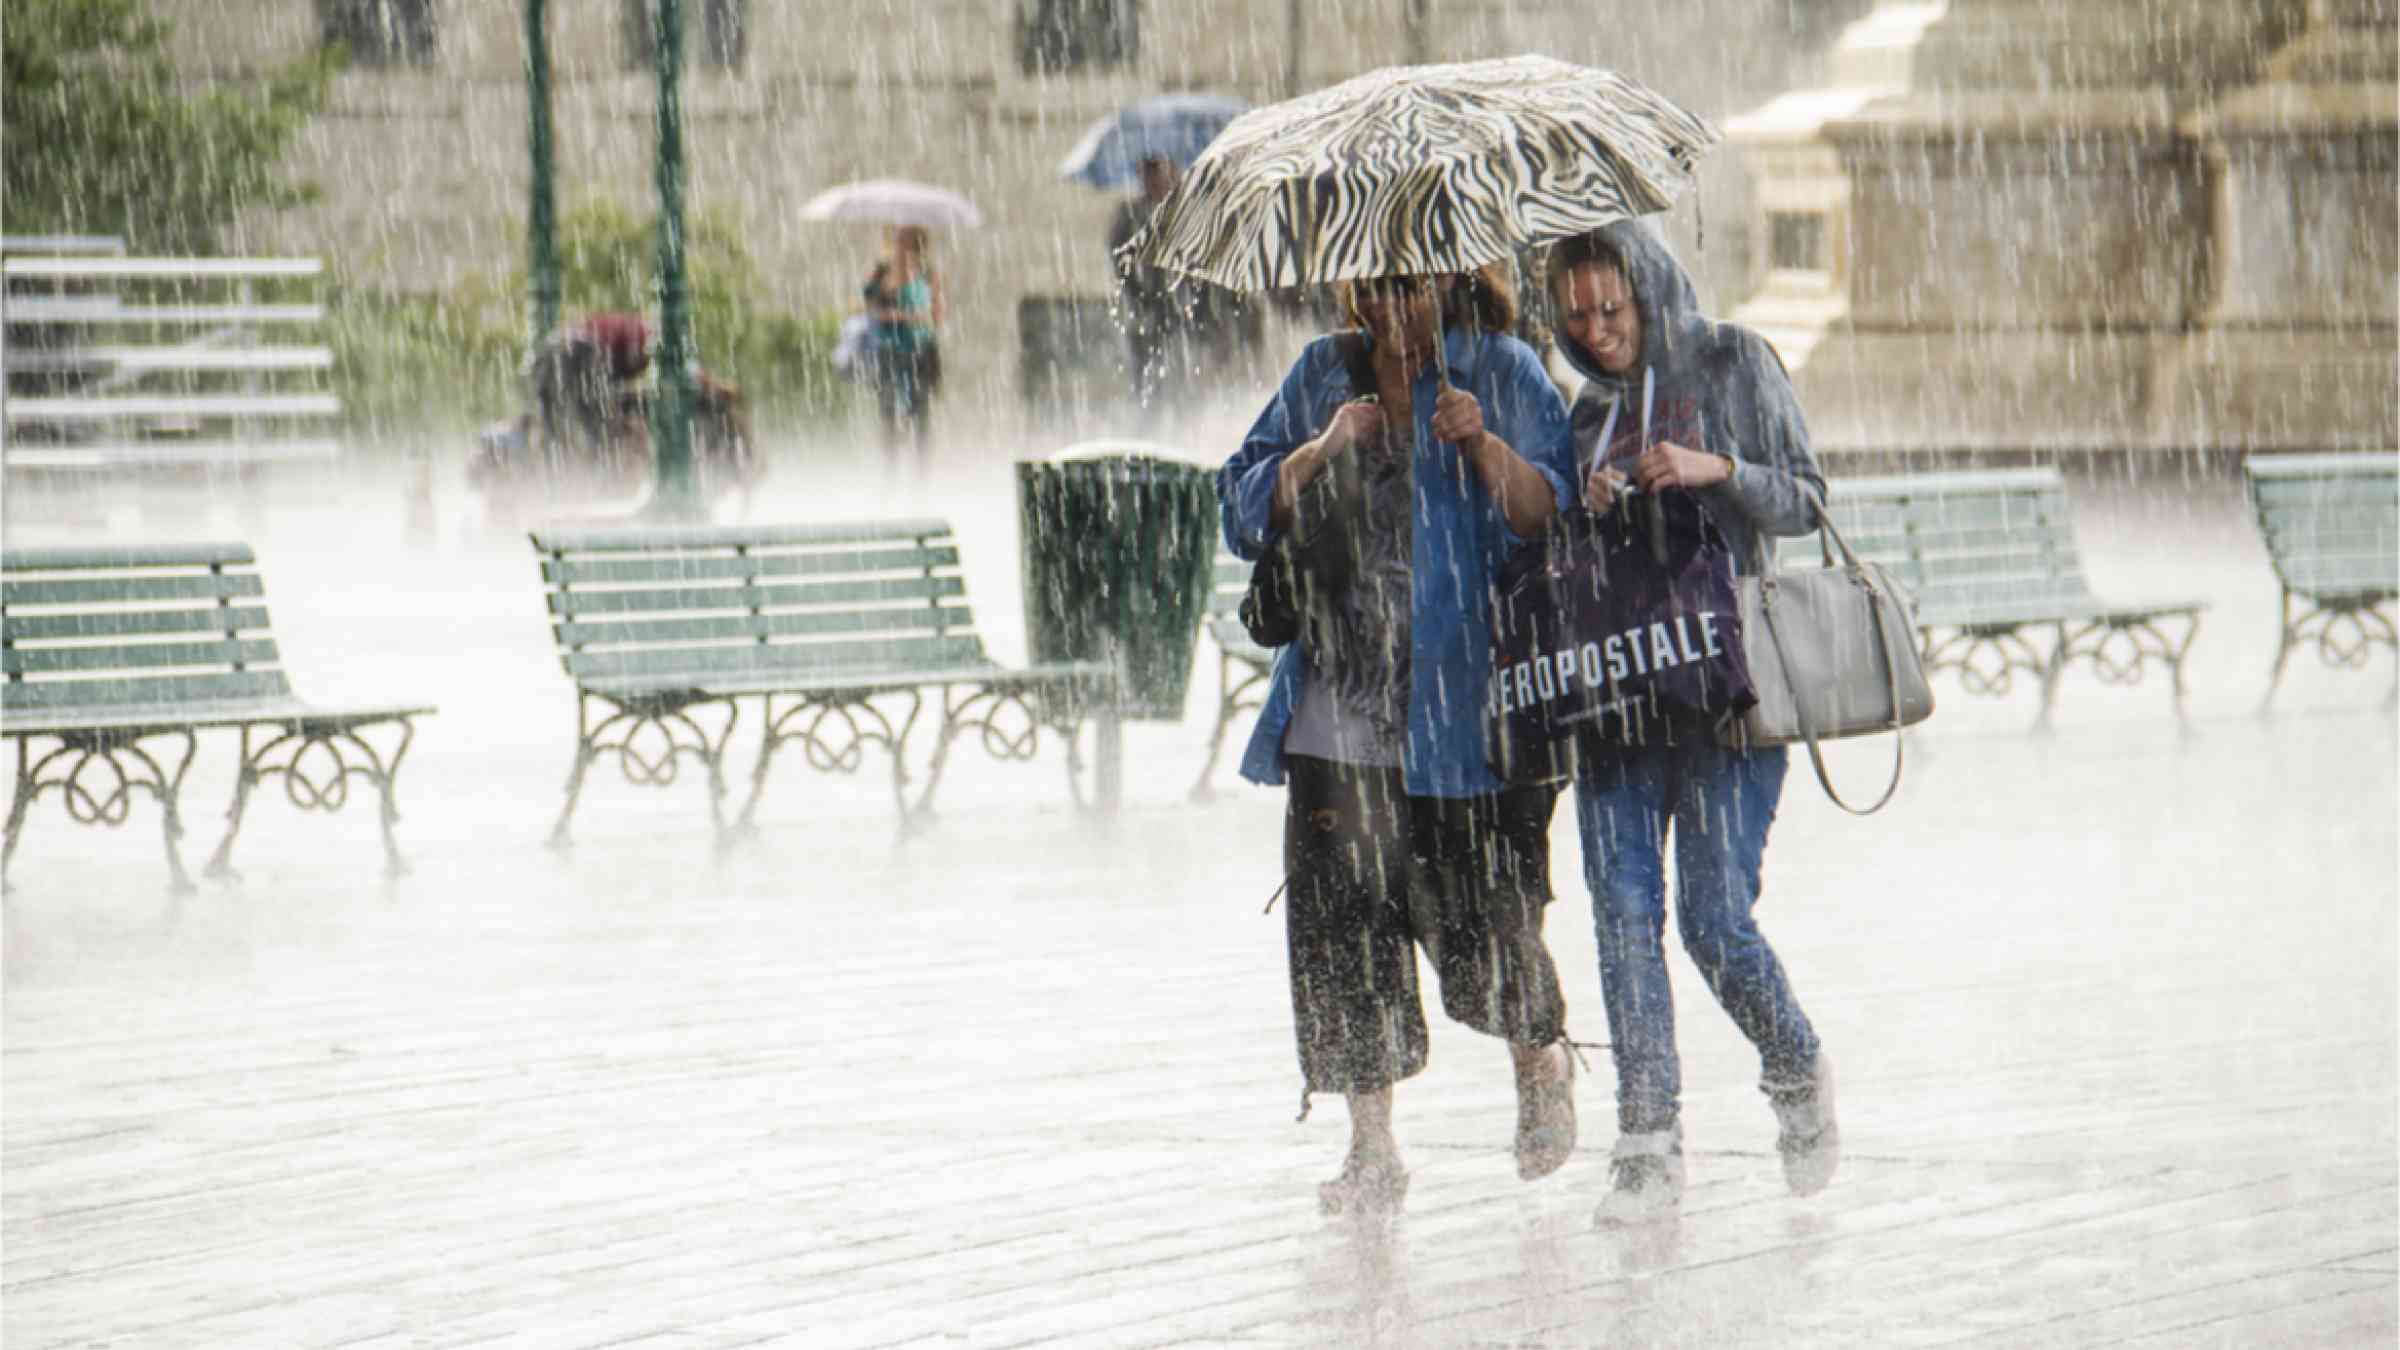 Pedestrians shelter under an umbrella amid heavy rains